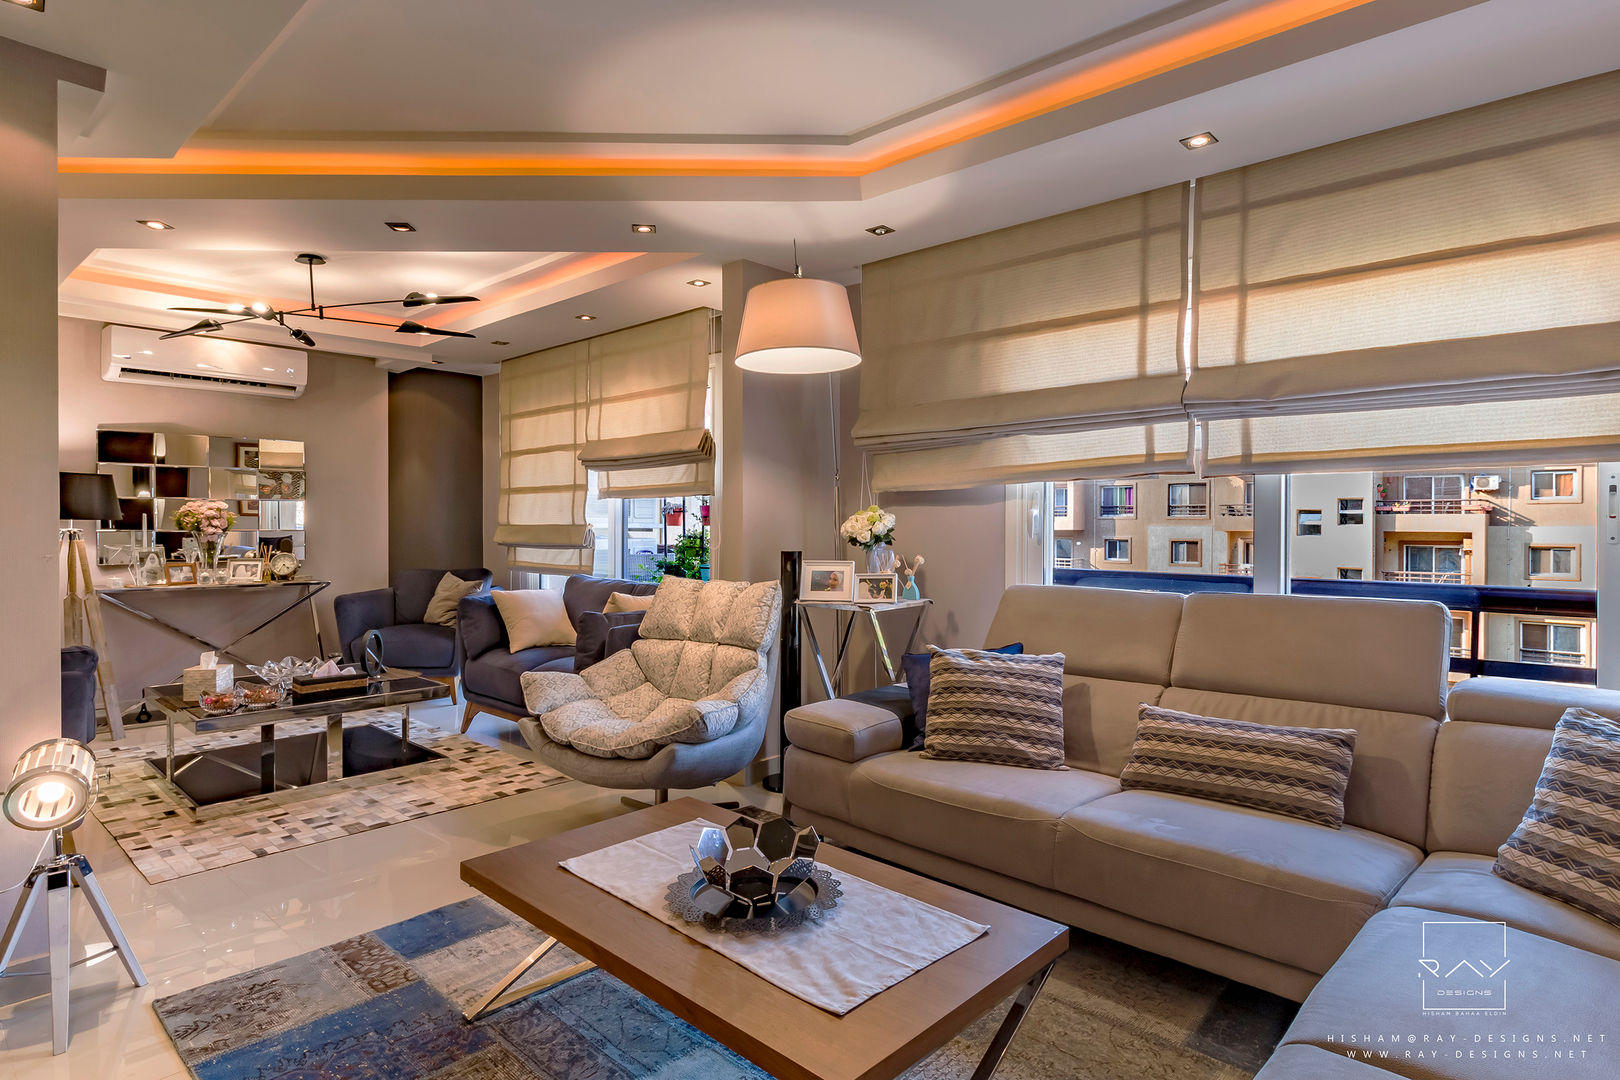 living room reception by raydesigns RayDesigns Salas de estar modernas